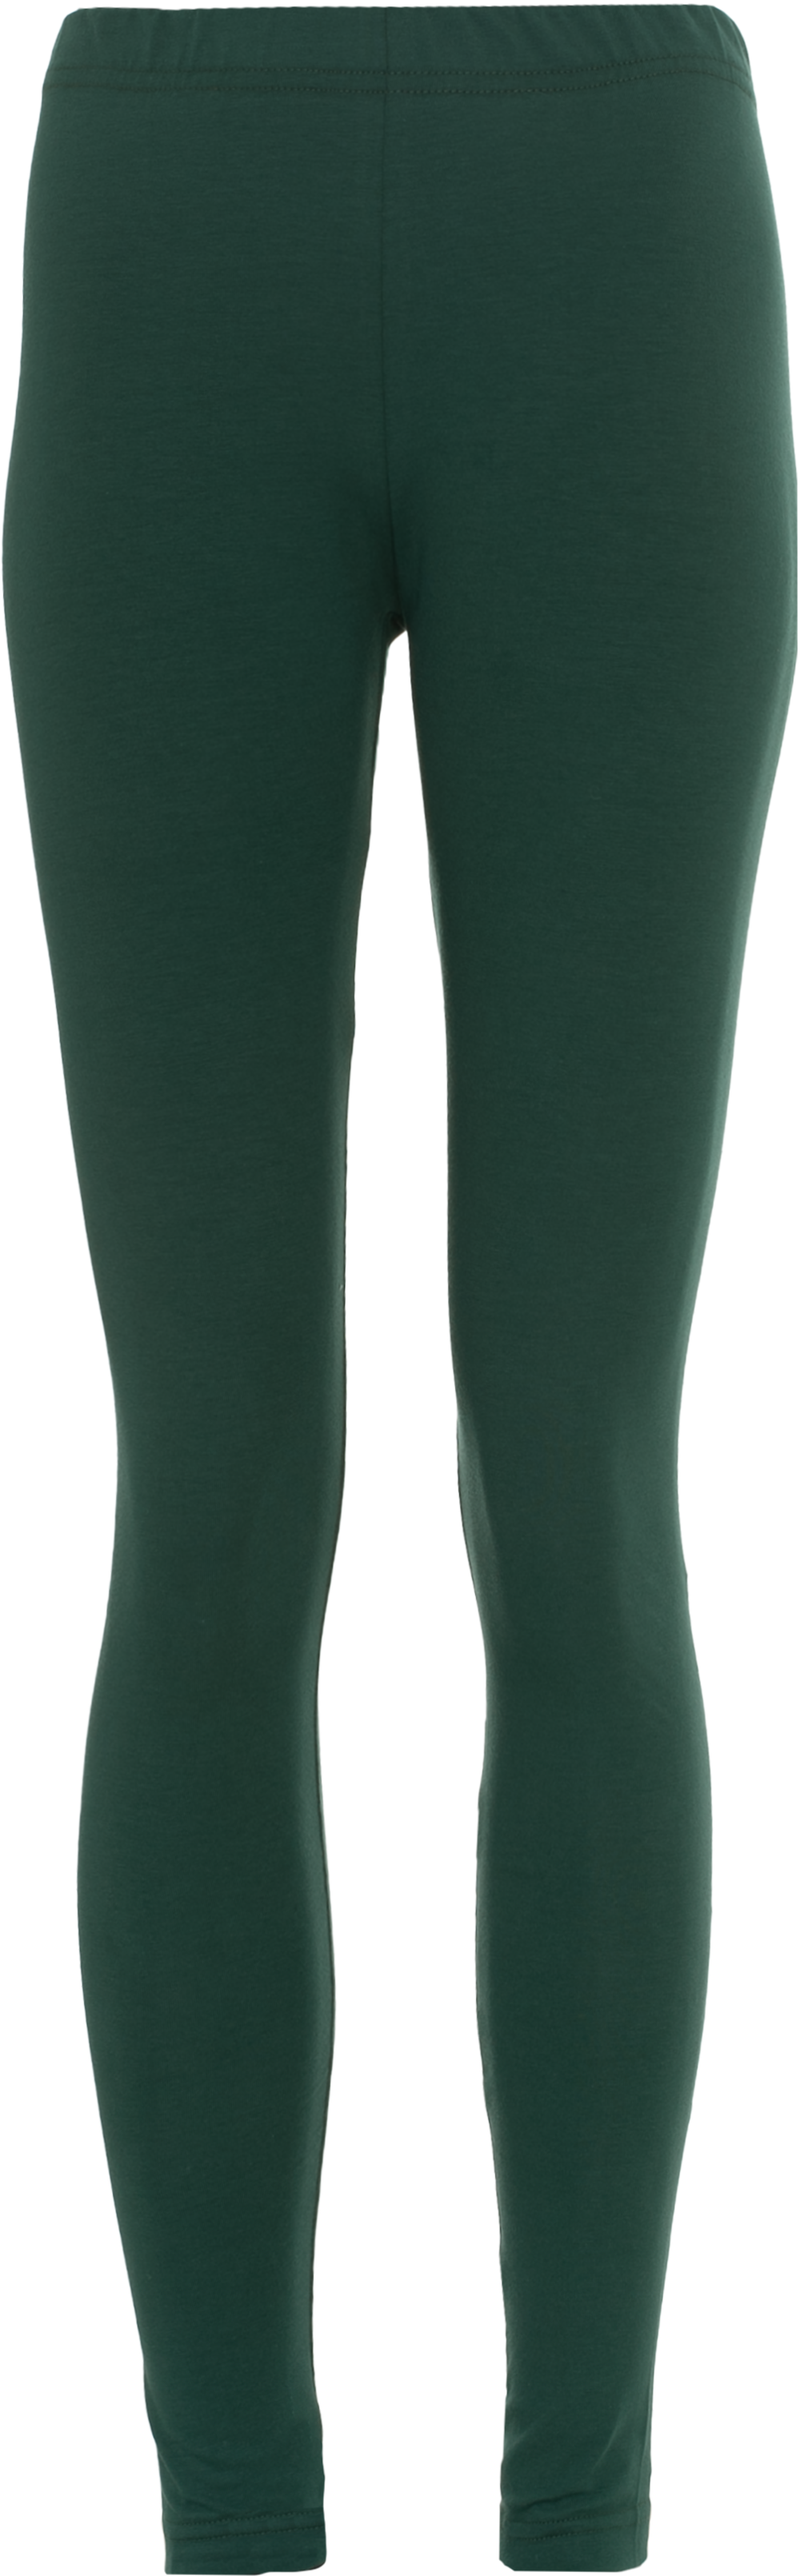 SORJA Leggings Dark Green S-XXXL - Paapii Design